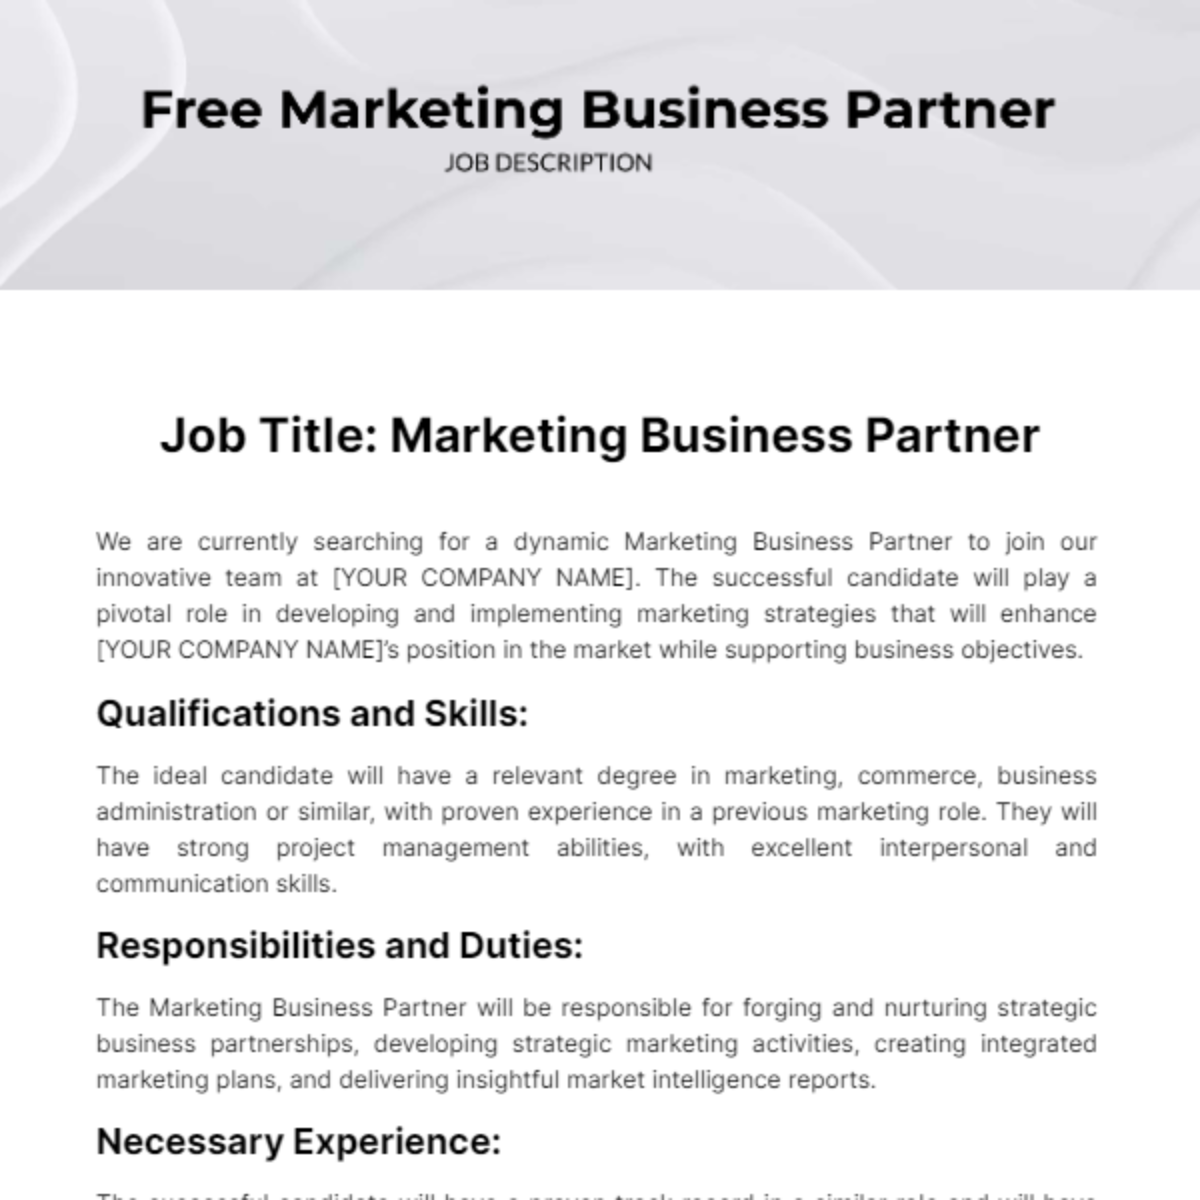 Free Marketing Business Partner Job Description Template